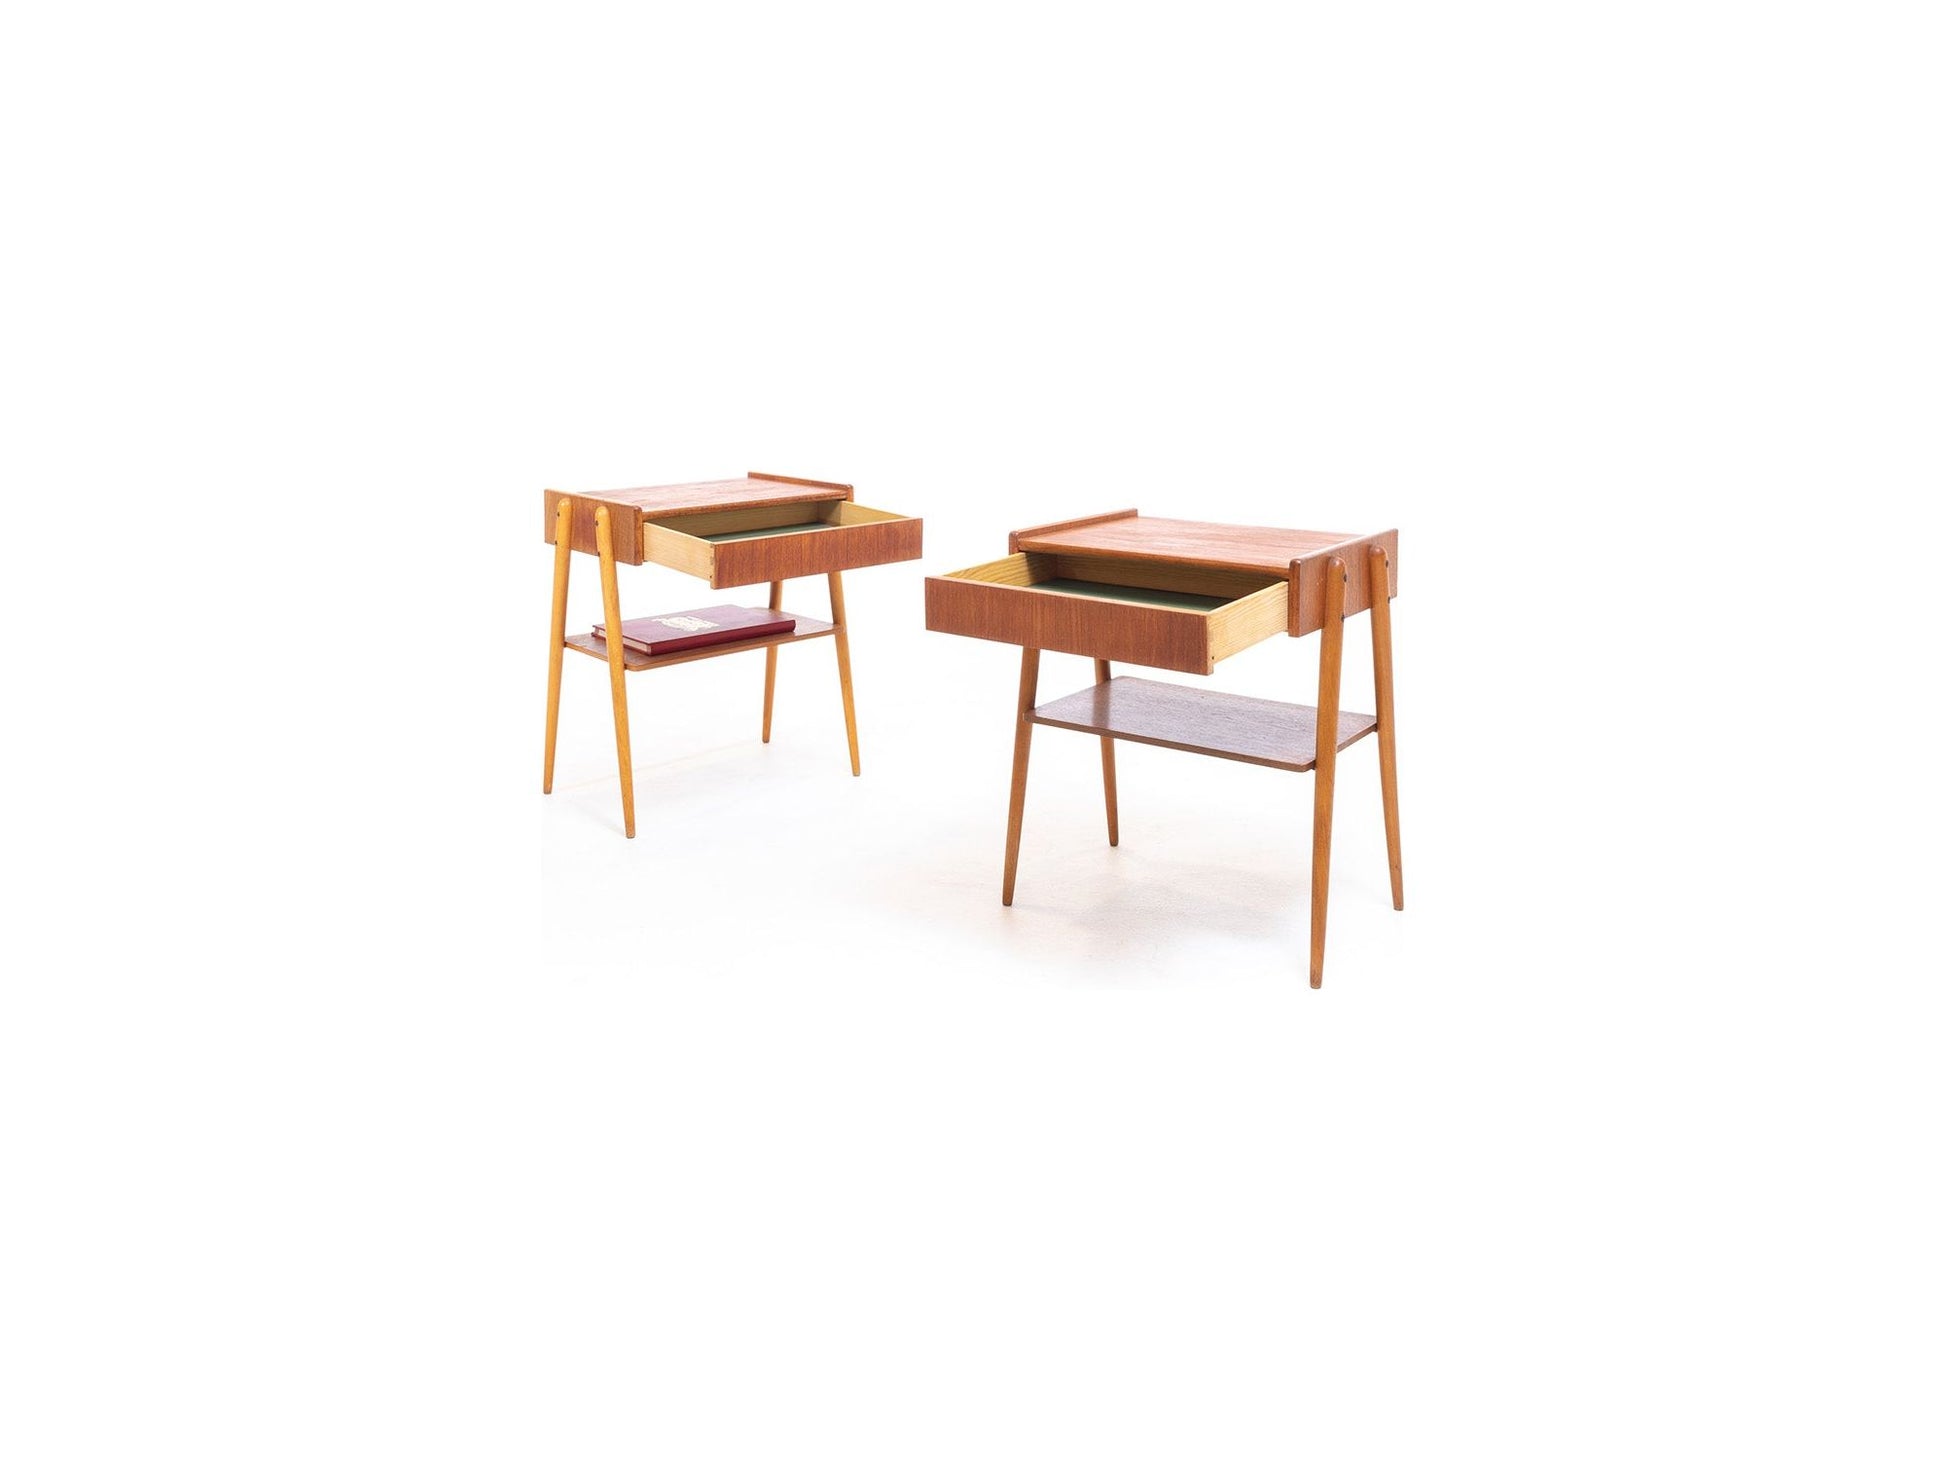 Pair of Teak & Oak Bedside Tables by Carlström & Co Möbelfabrik Habitus London